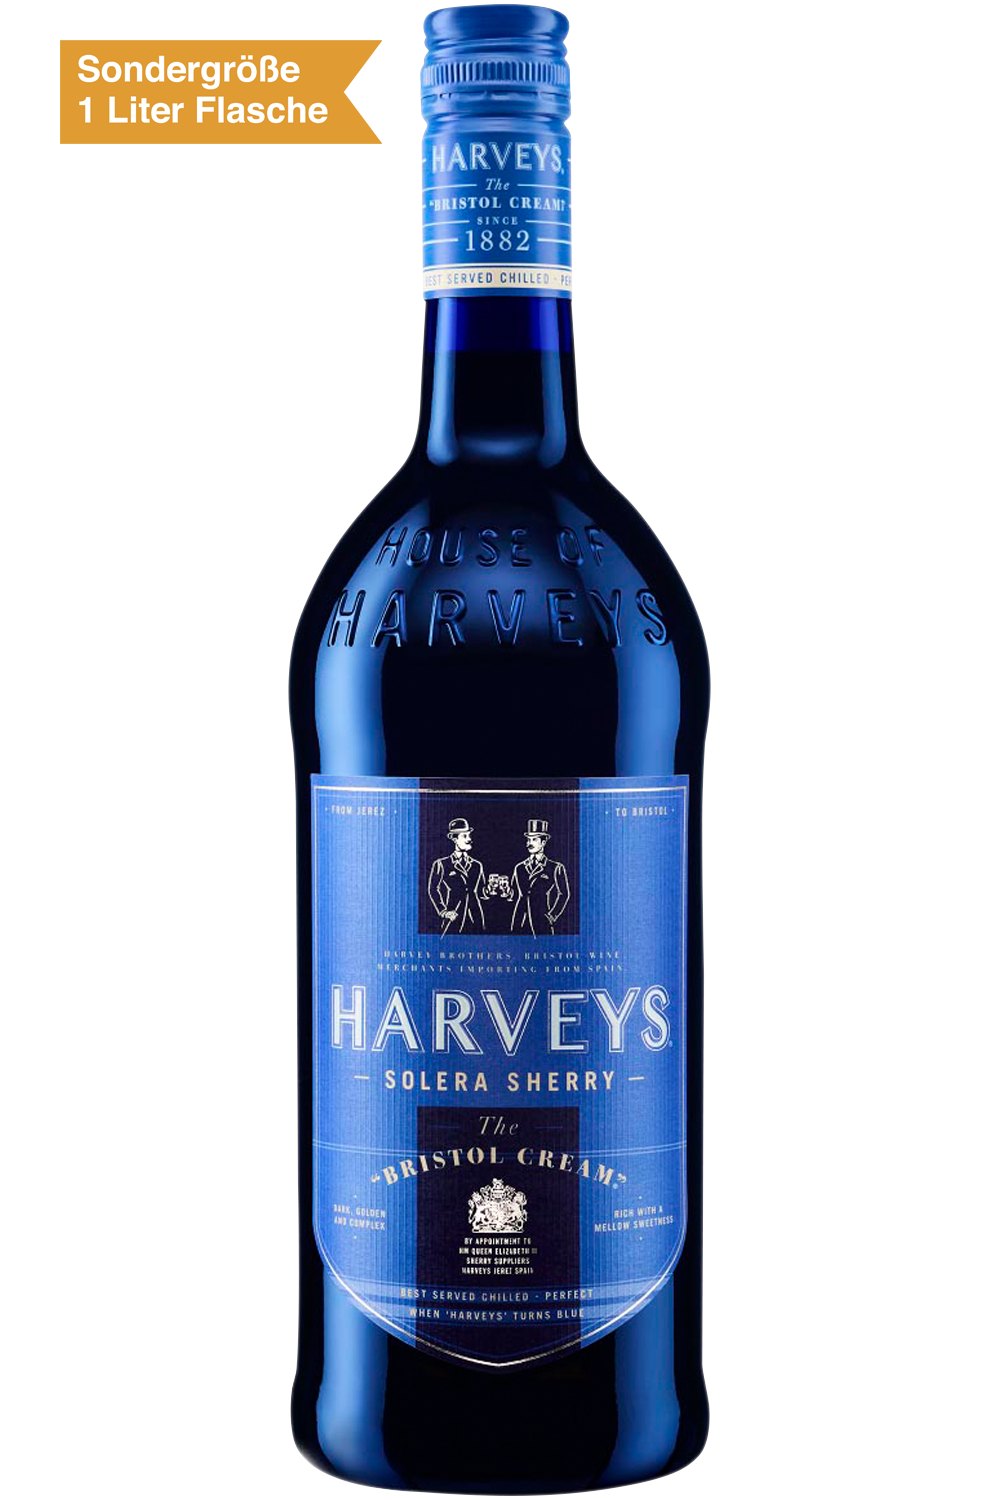 Harvey's Bristol Cream Sherry 